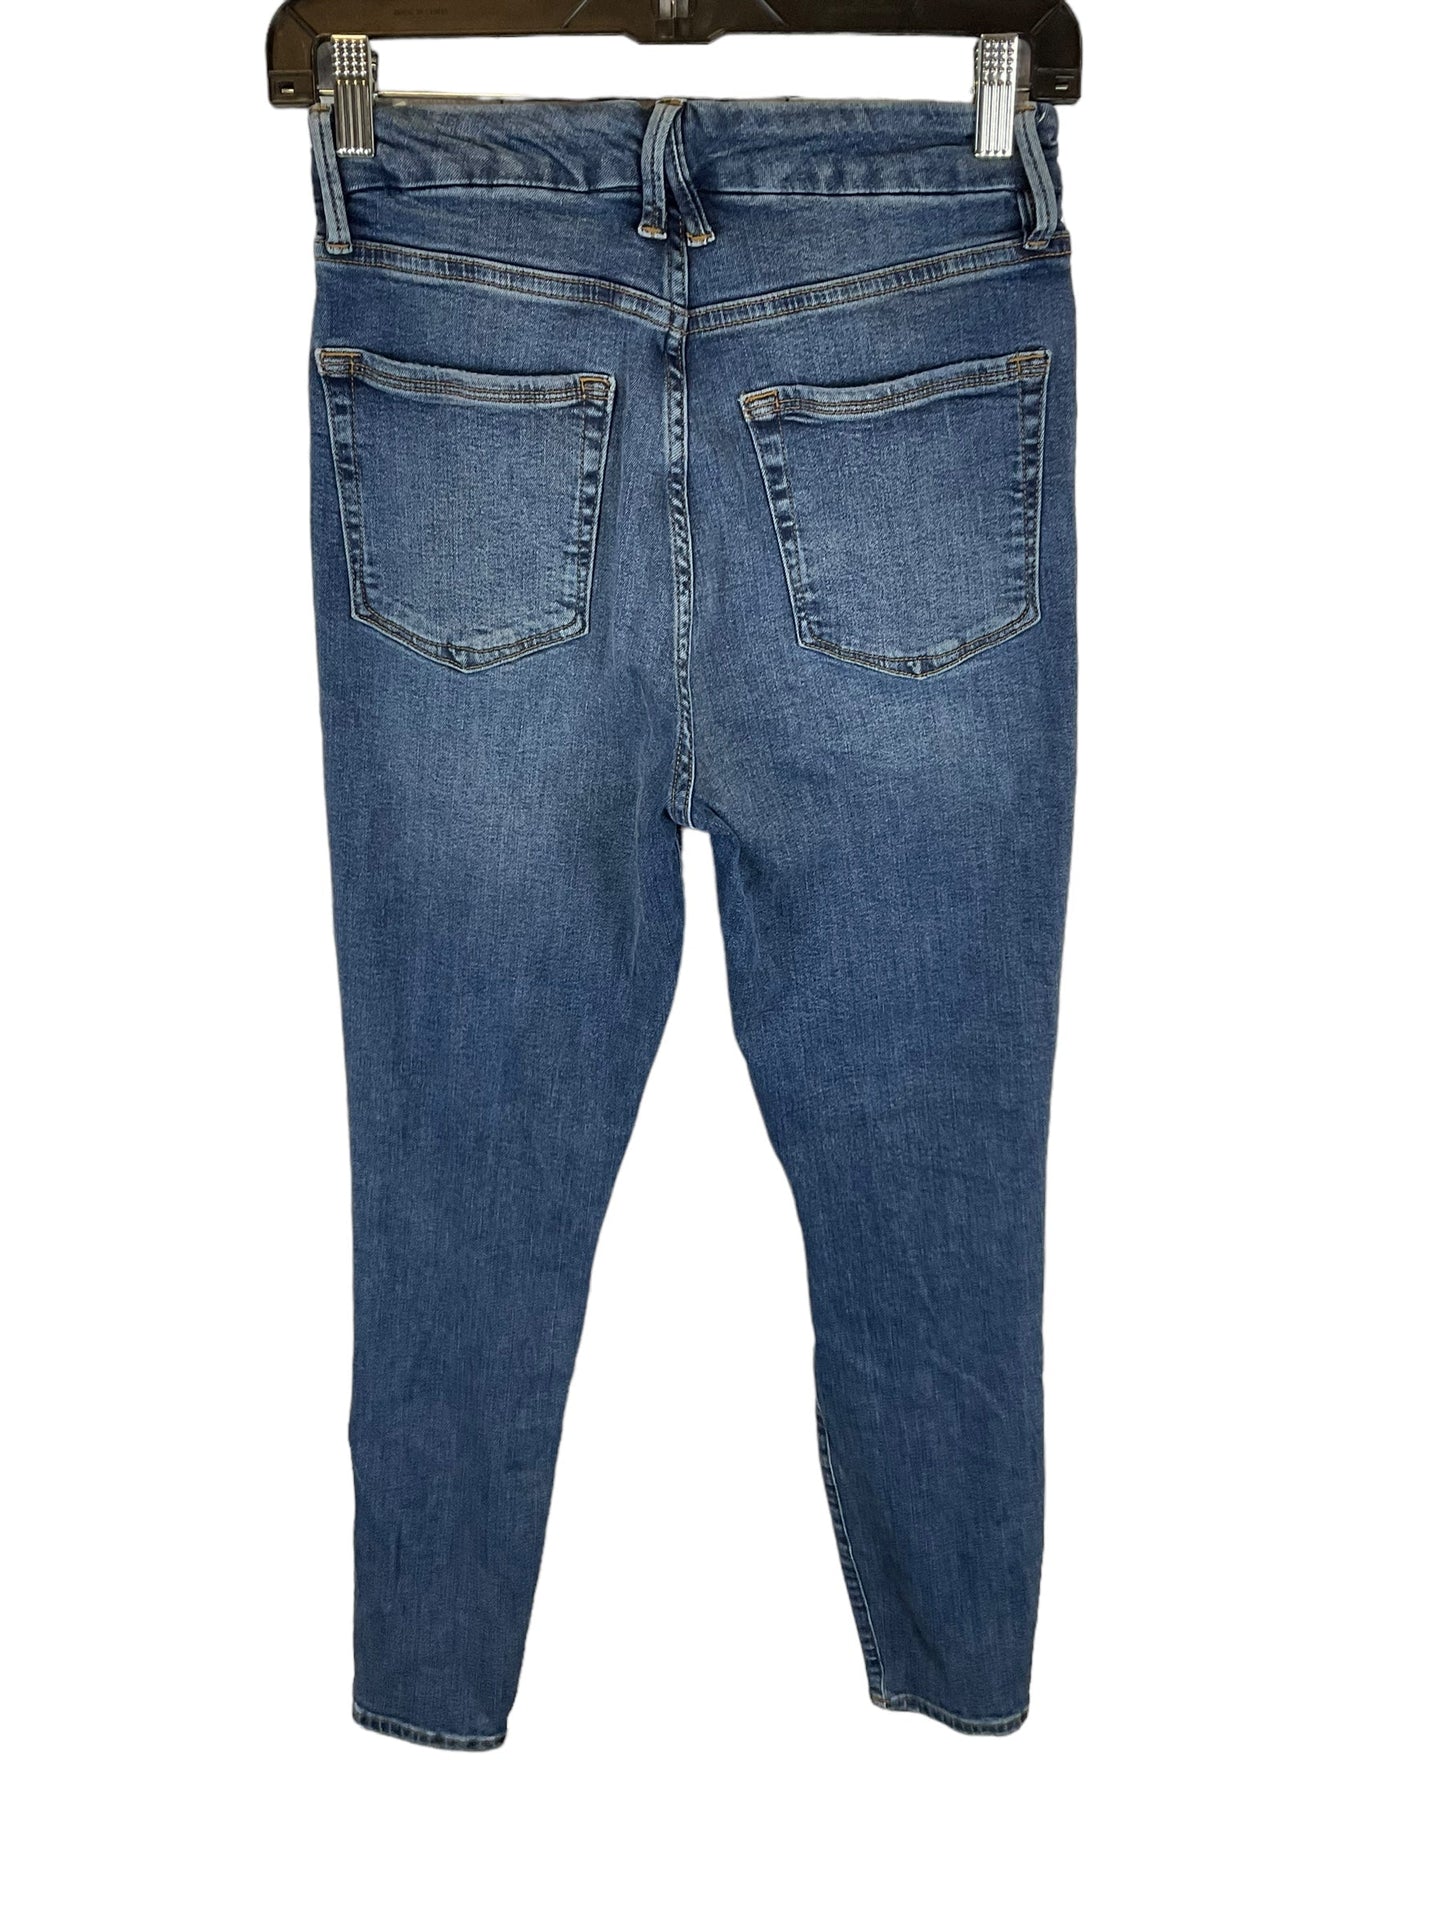 Blue Denim Jeans Designer Good American, Size 8